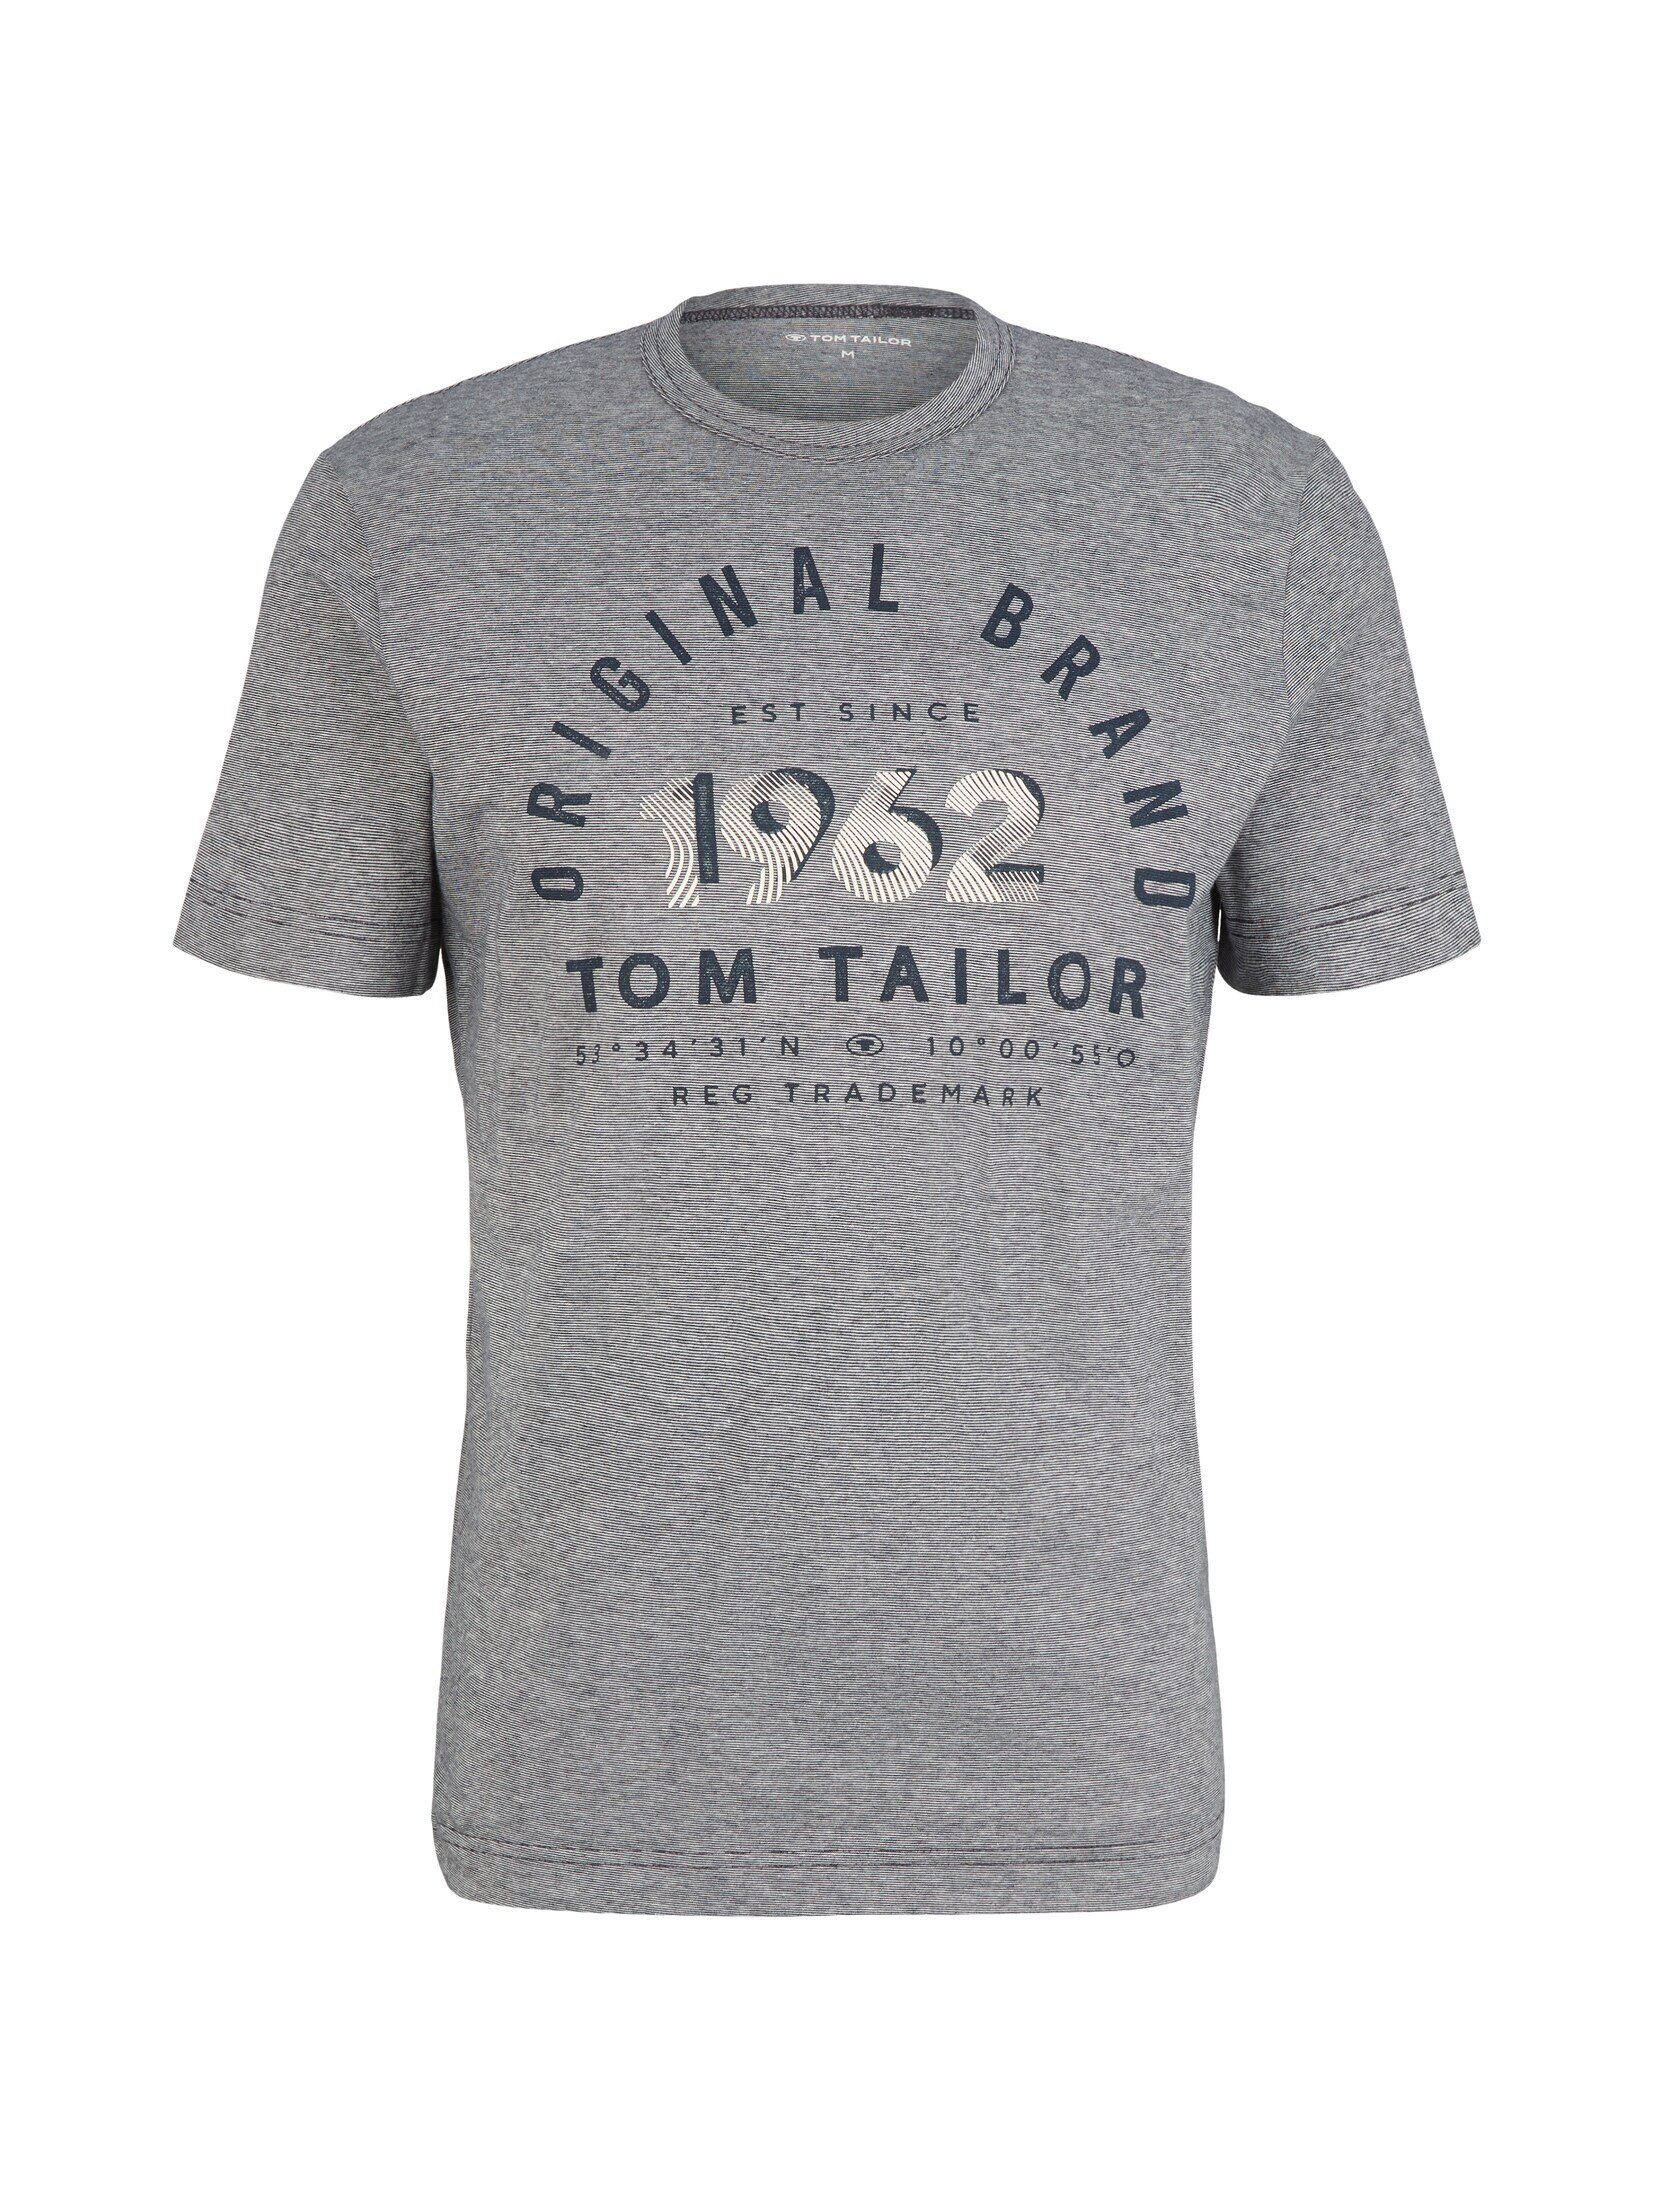 TOM TAILOR offwhite navy T-Shirt thin T-Shirt mit Print stripe